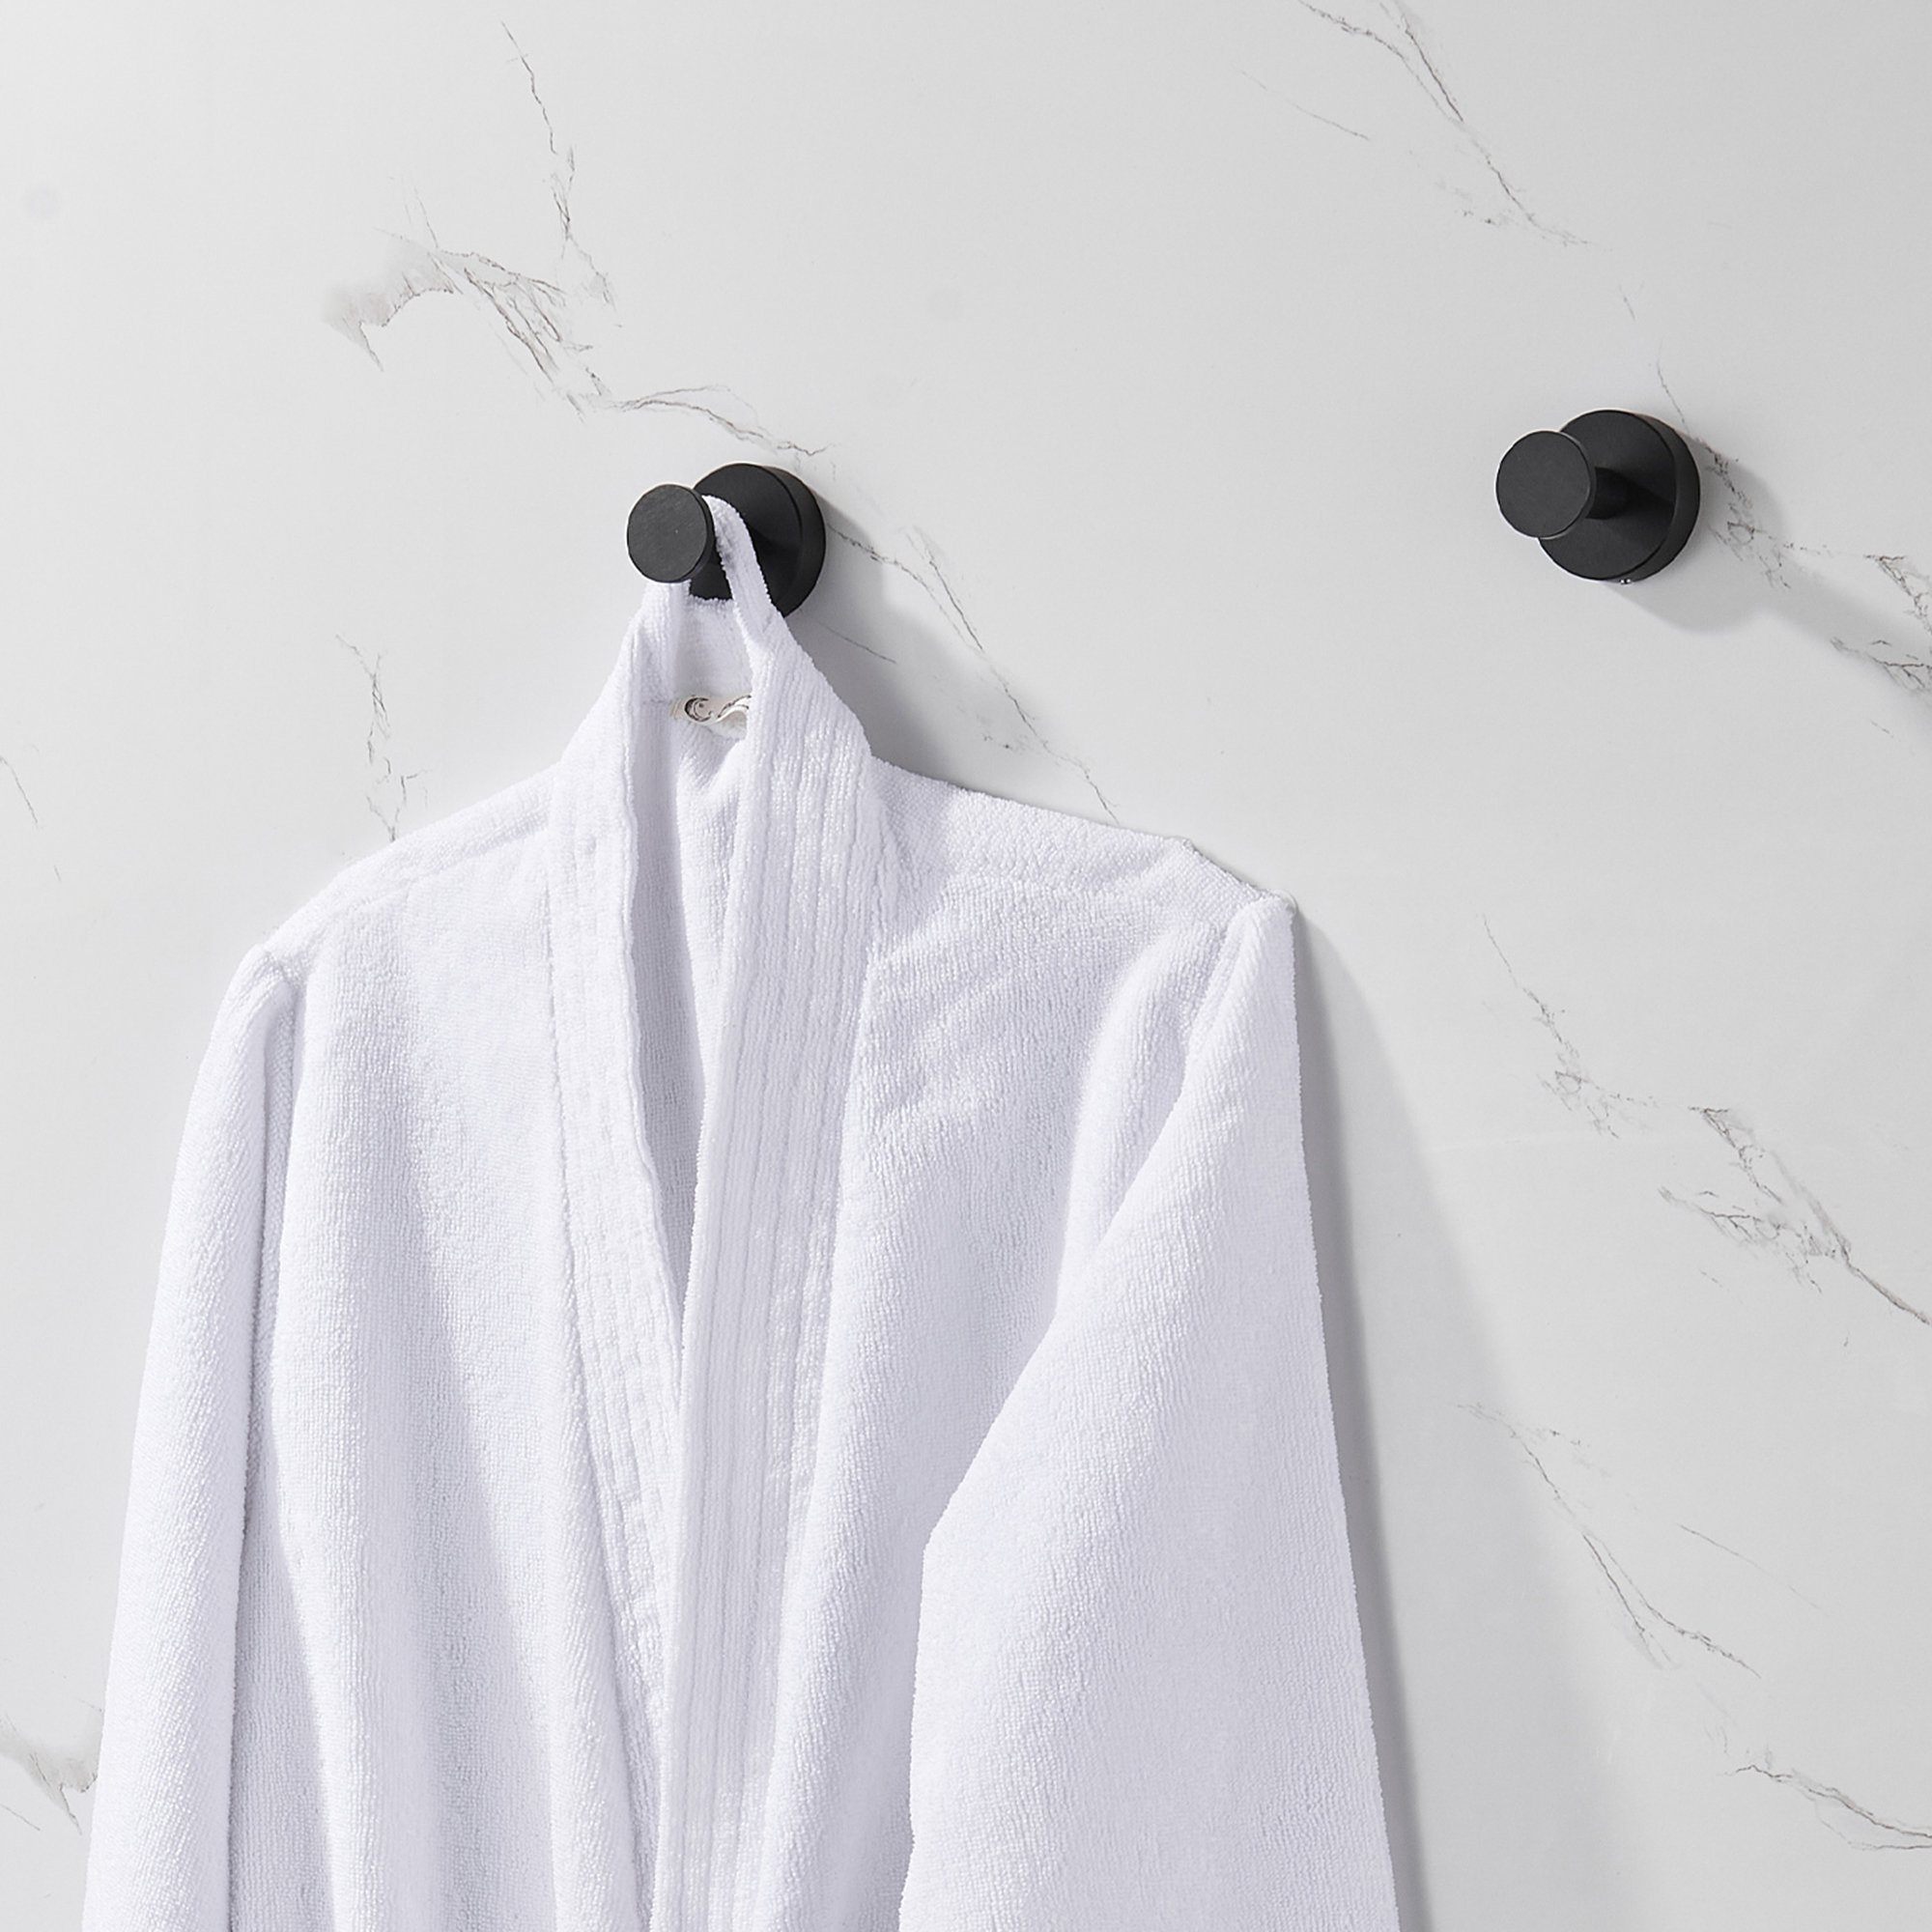 Nolimas Double Robe Wall Mounted Towel Hook & Reviews - Wayfair Canada